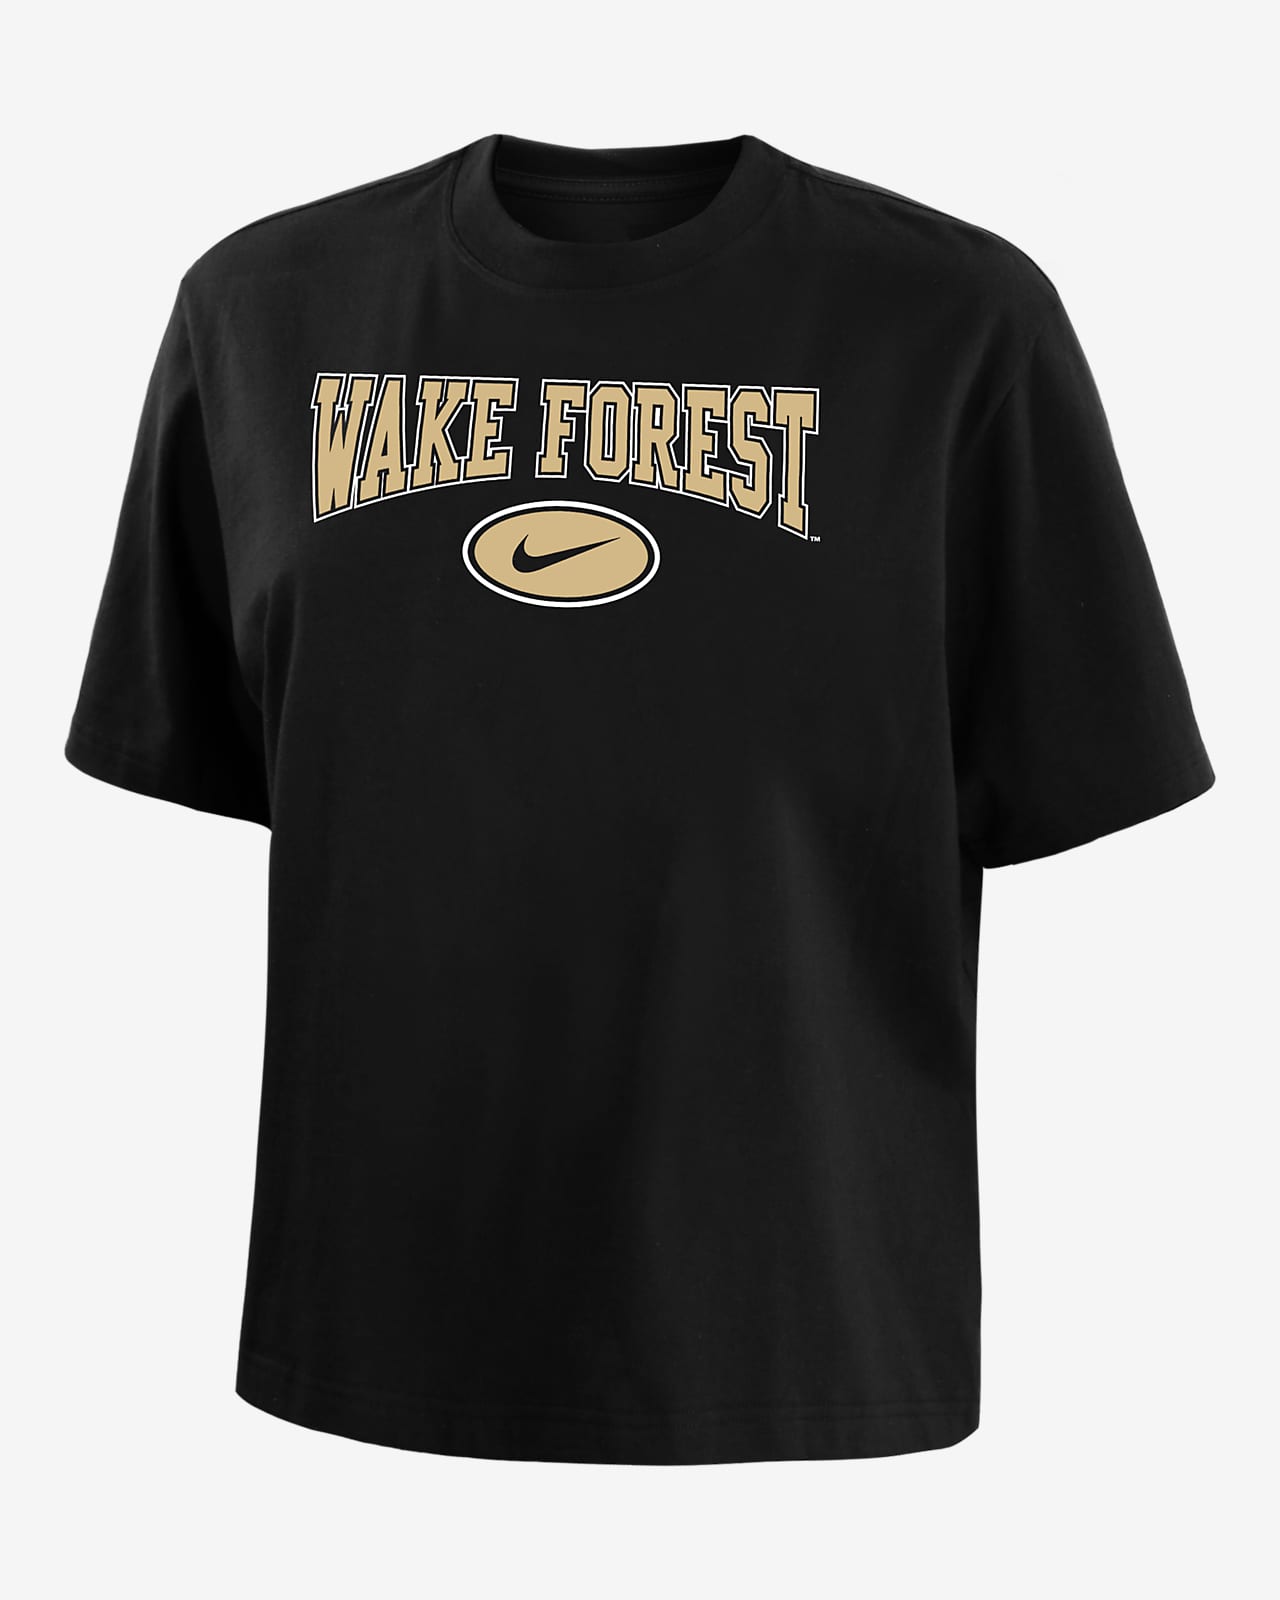 Wake Forest Women's Nike College Boxy T-Shirt